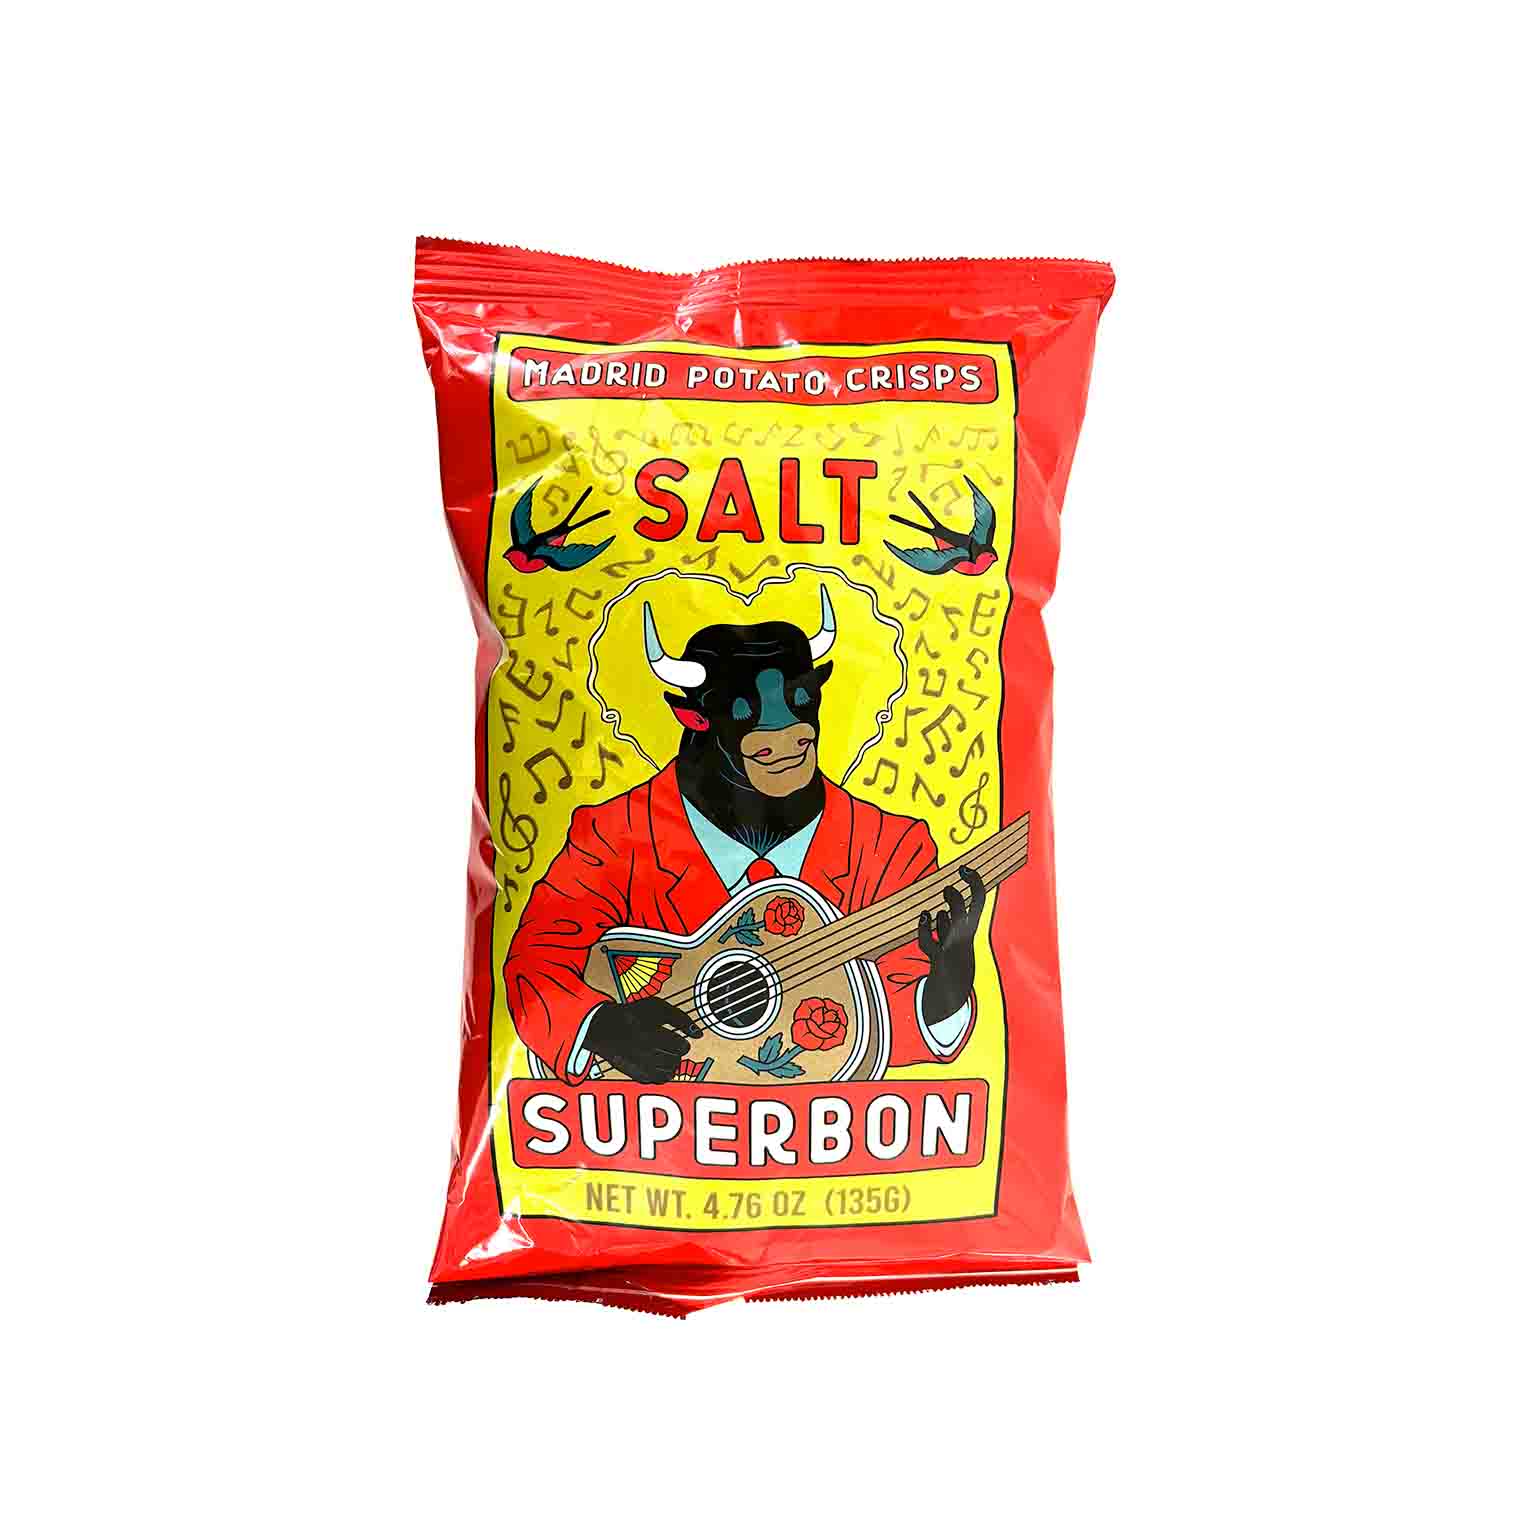 SUPERBON SALT POTATO CHIPS 135g